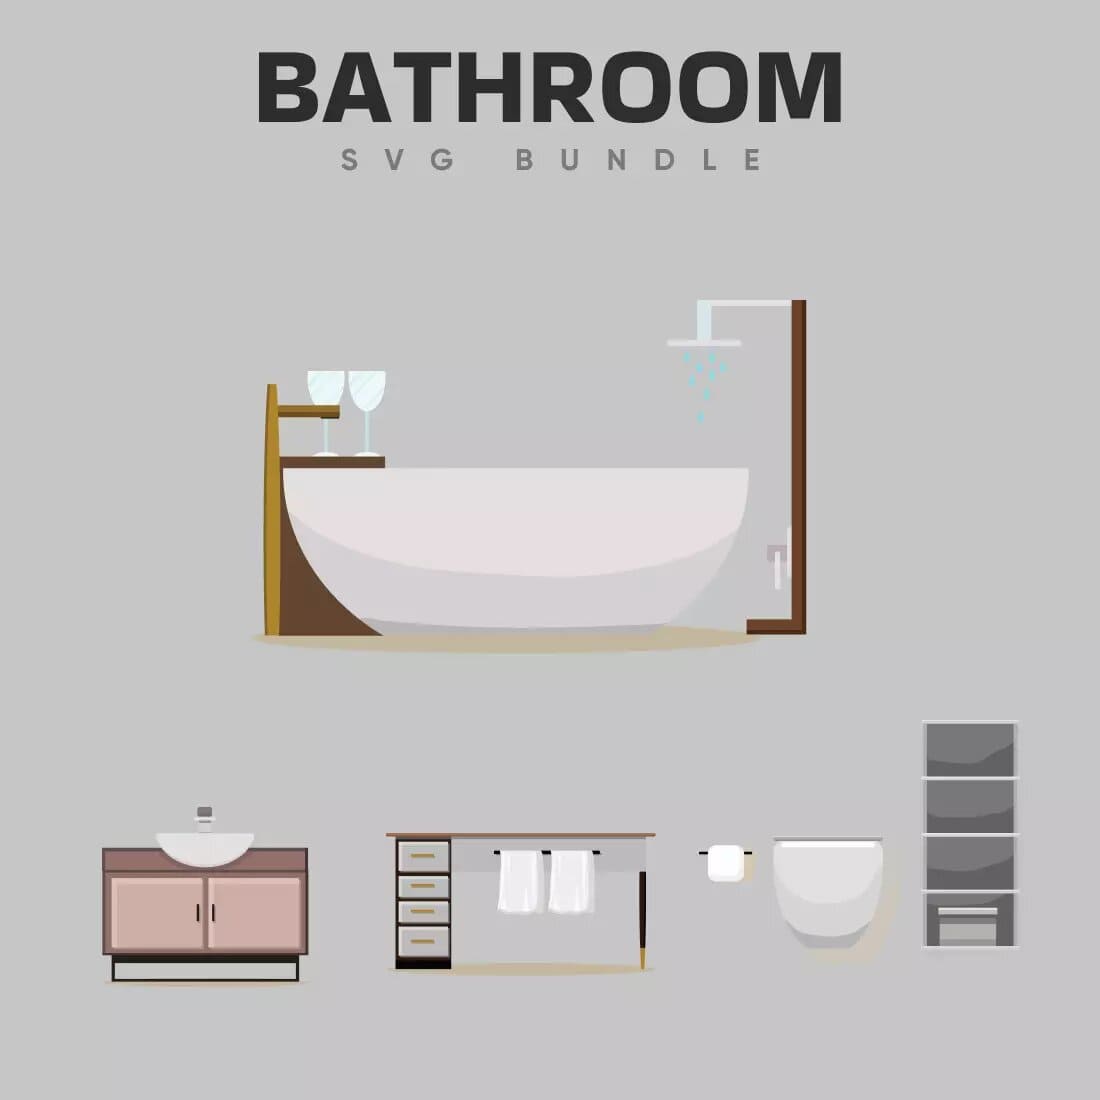 Extensive Bathroom SVG Bundle Preview 3.